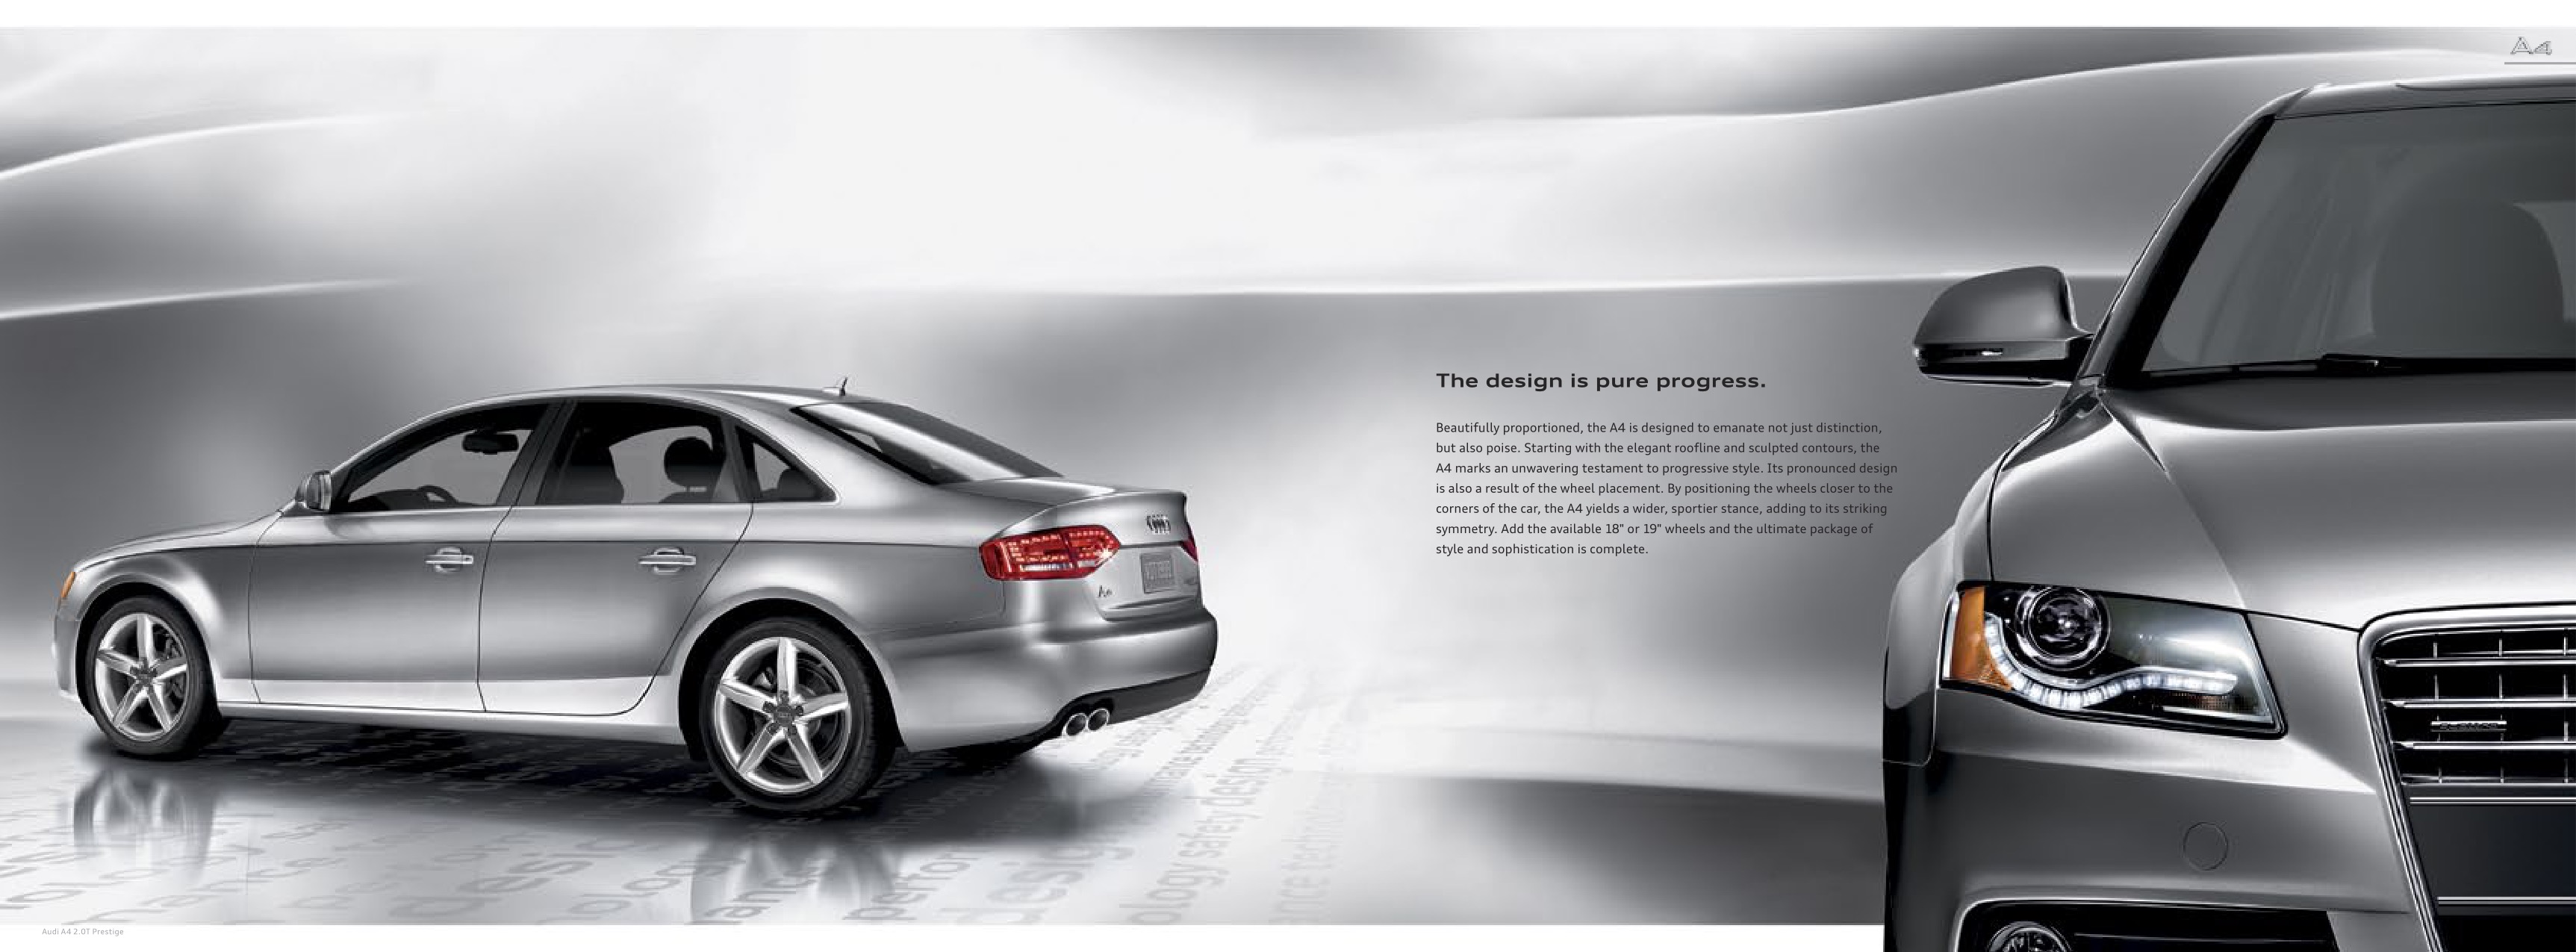 2010 Audi A4 Brochure Page 2